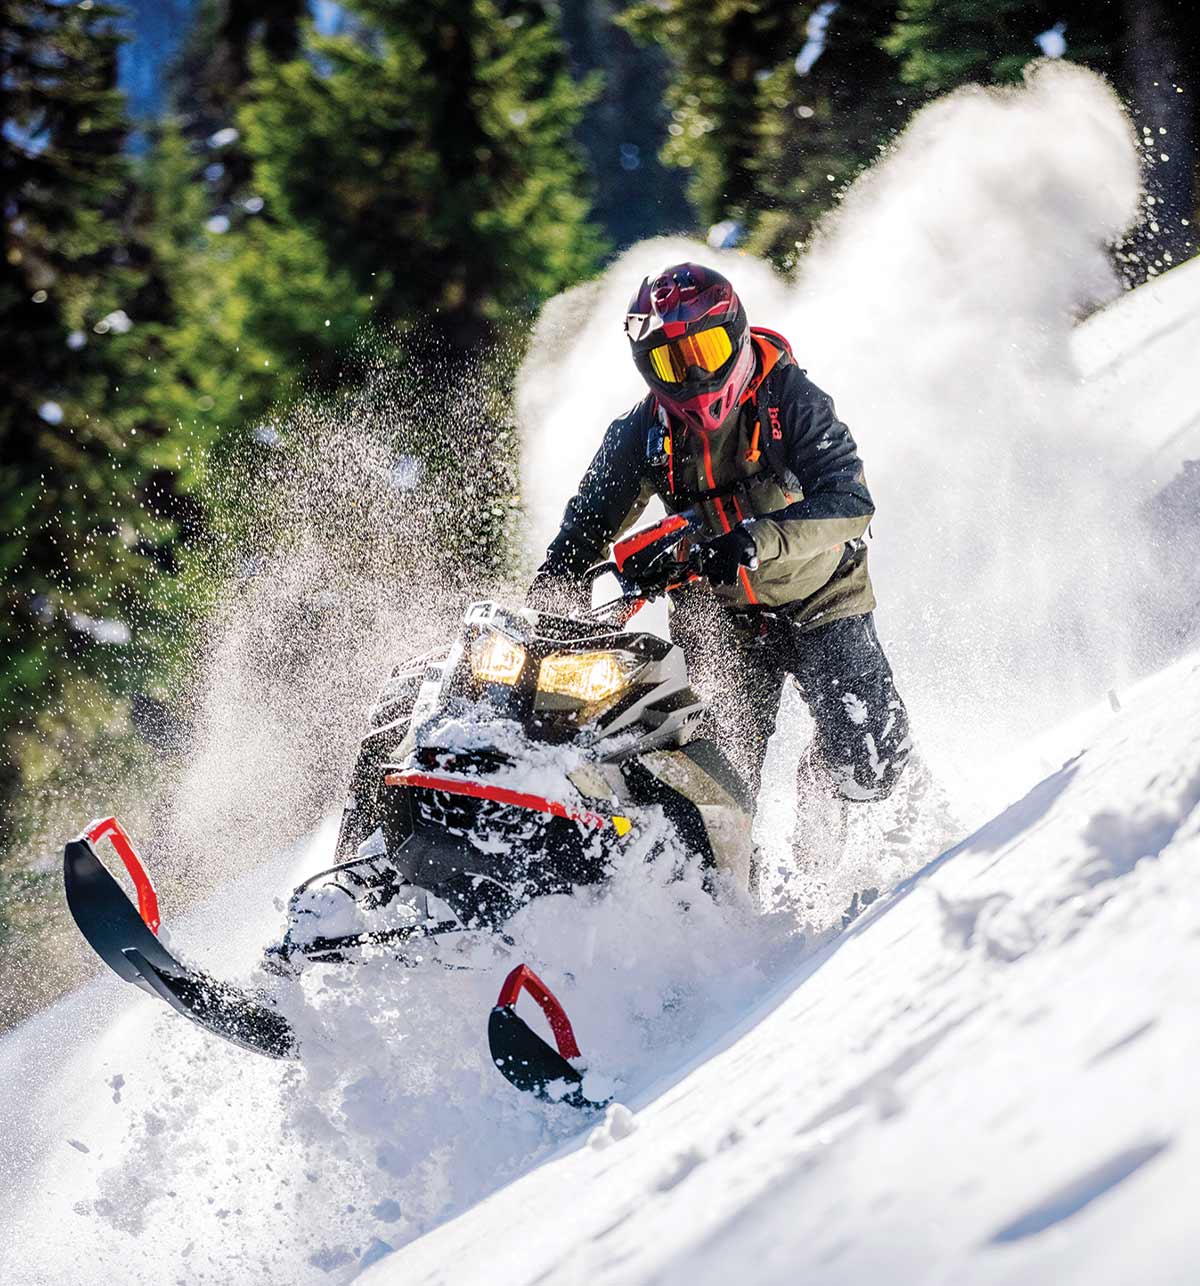 Rider kicking up snow in the 2022 Ski Doo